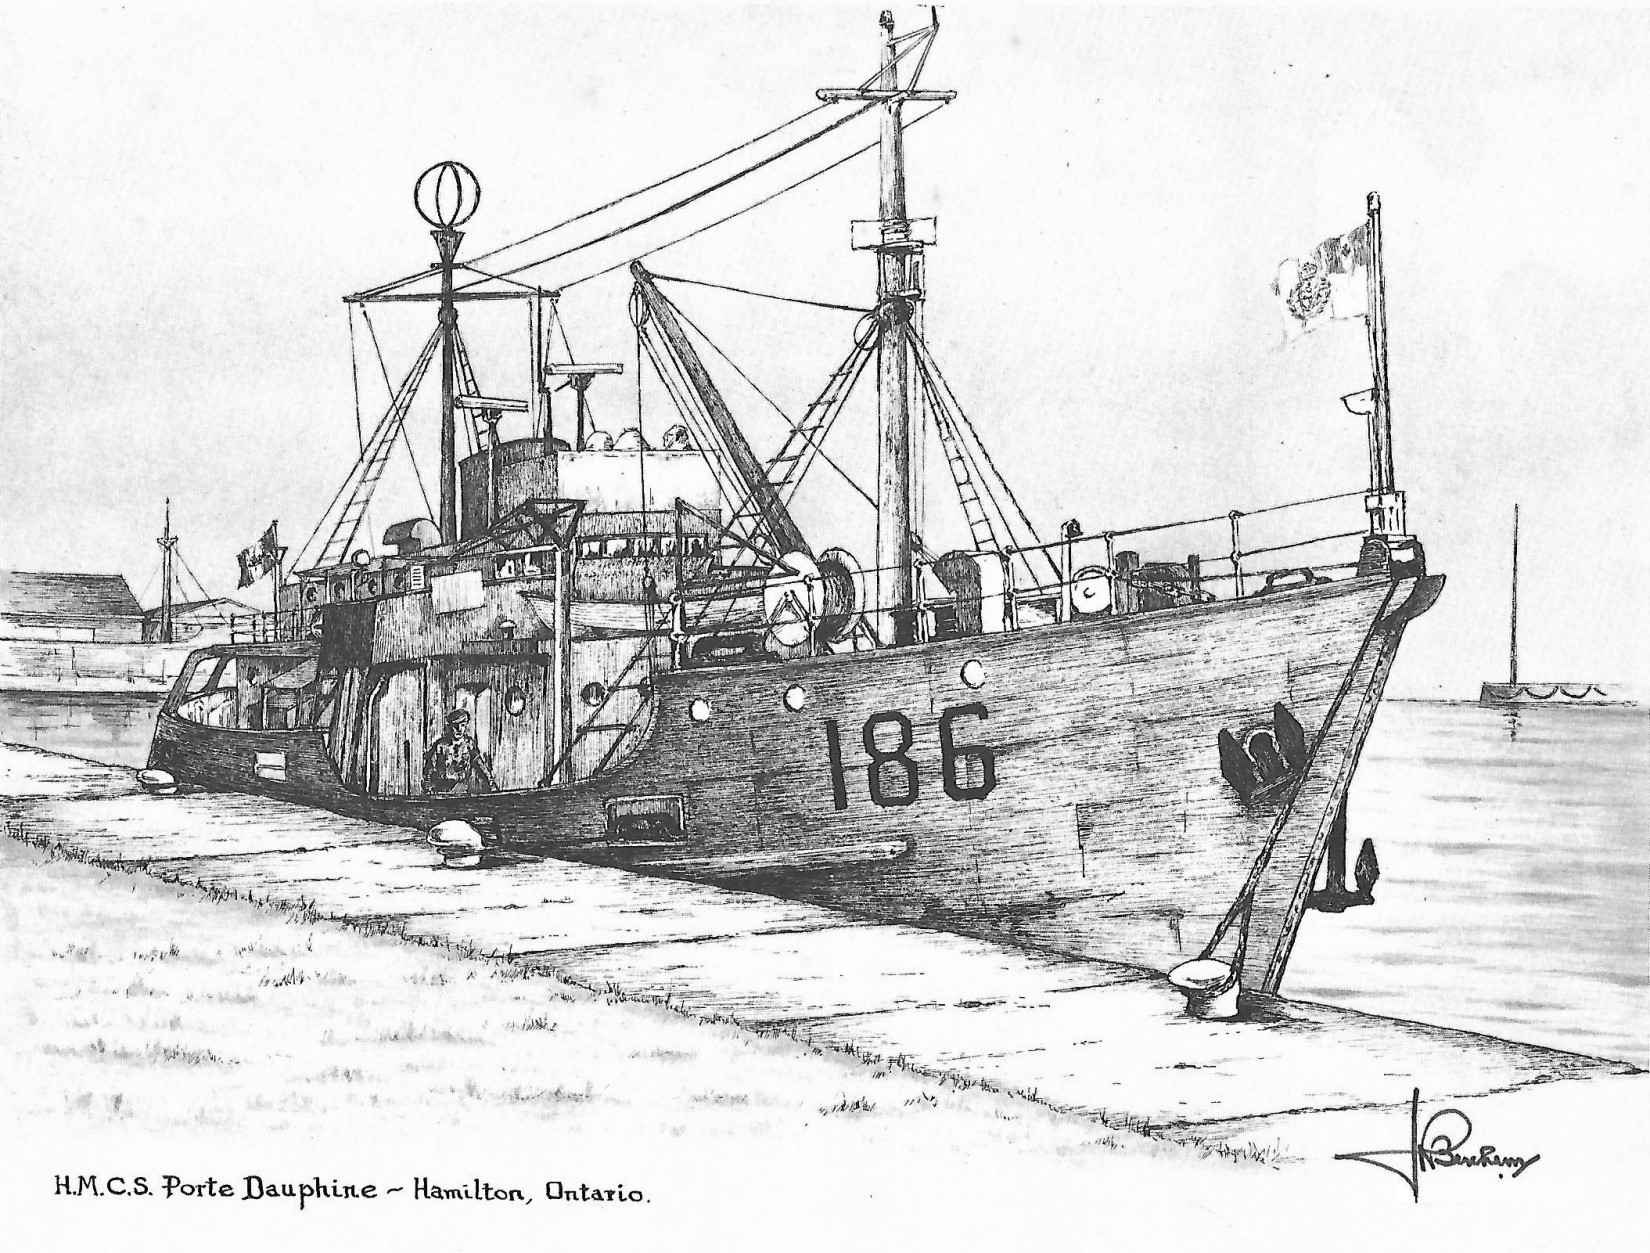 Sketch by F.R. Berchem of HMCS Porte Dauphine, Hamilton Harbour, 1975.